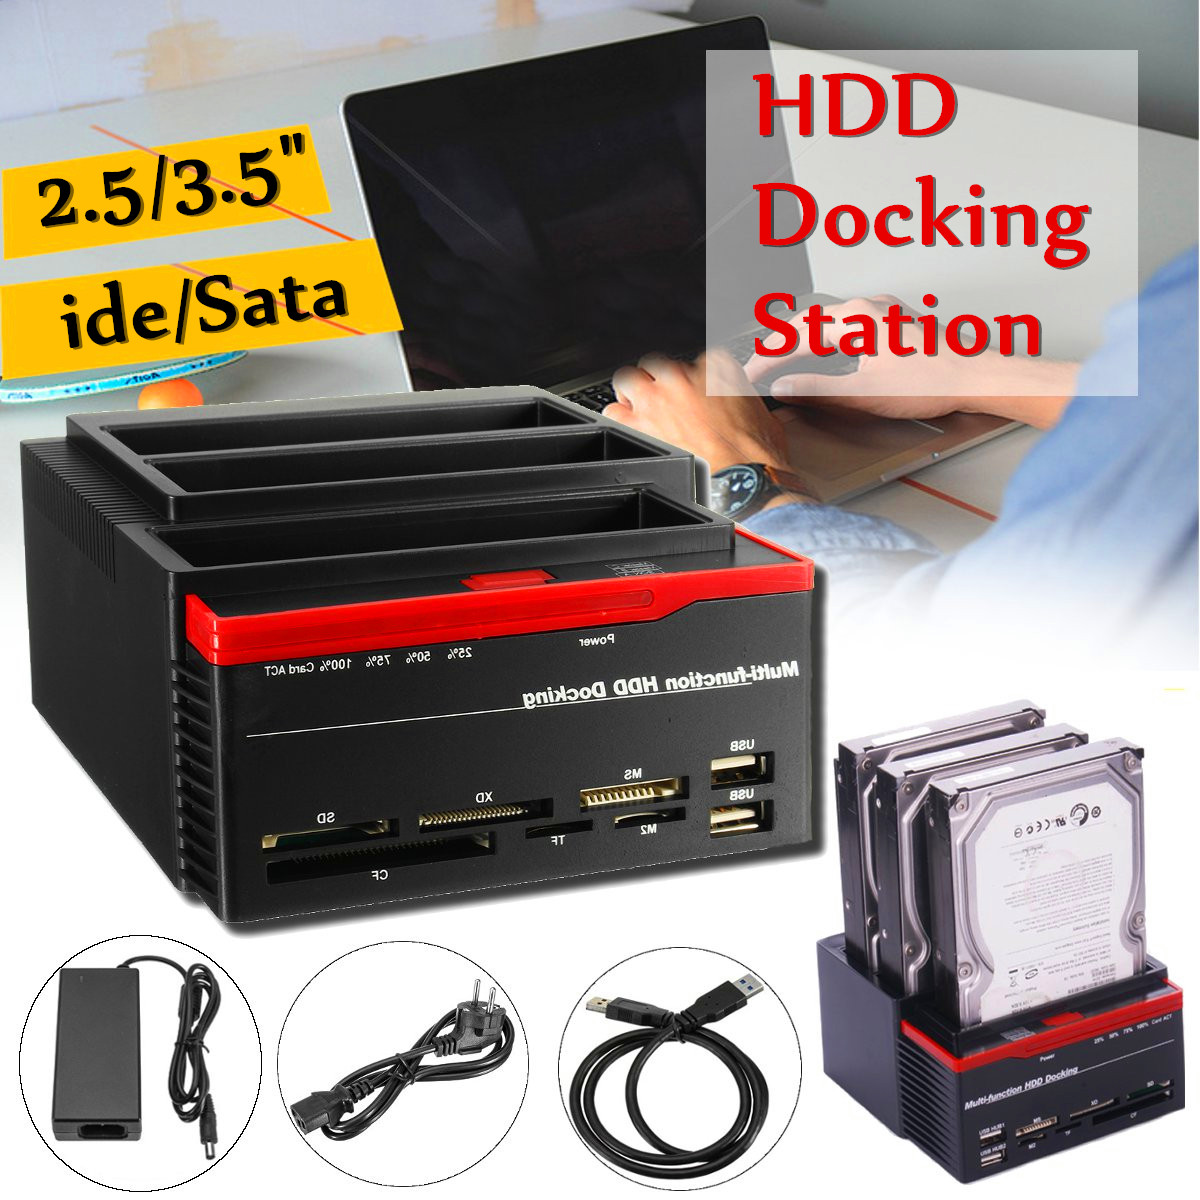 EU-25quot35quot-USB-30-To-SATA-IDE-HDD-SSD-Hard-Drive-Docking-Station-Offline-Clone-Card-Reader-Hub-1248778-1